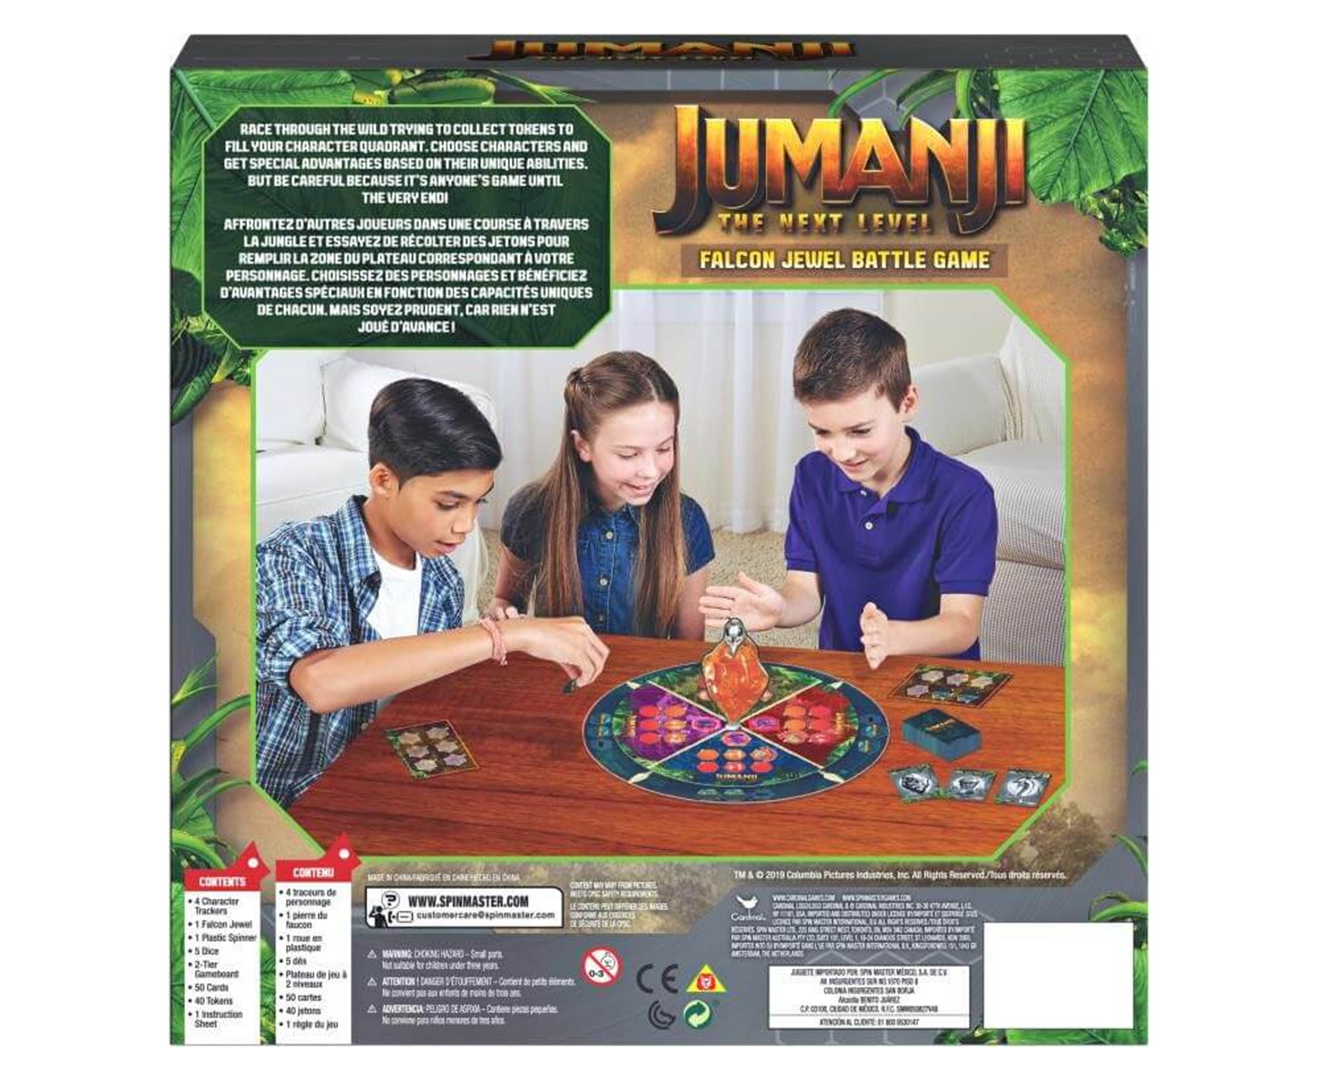 online jumanji board game